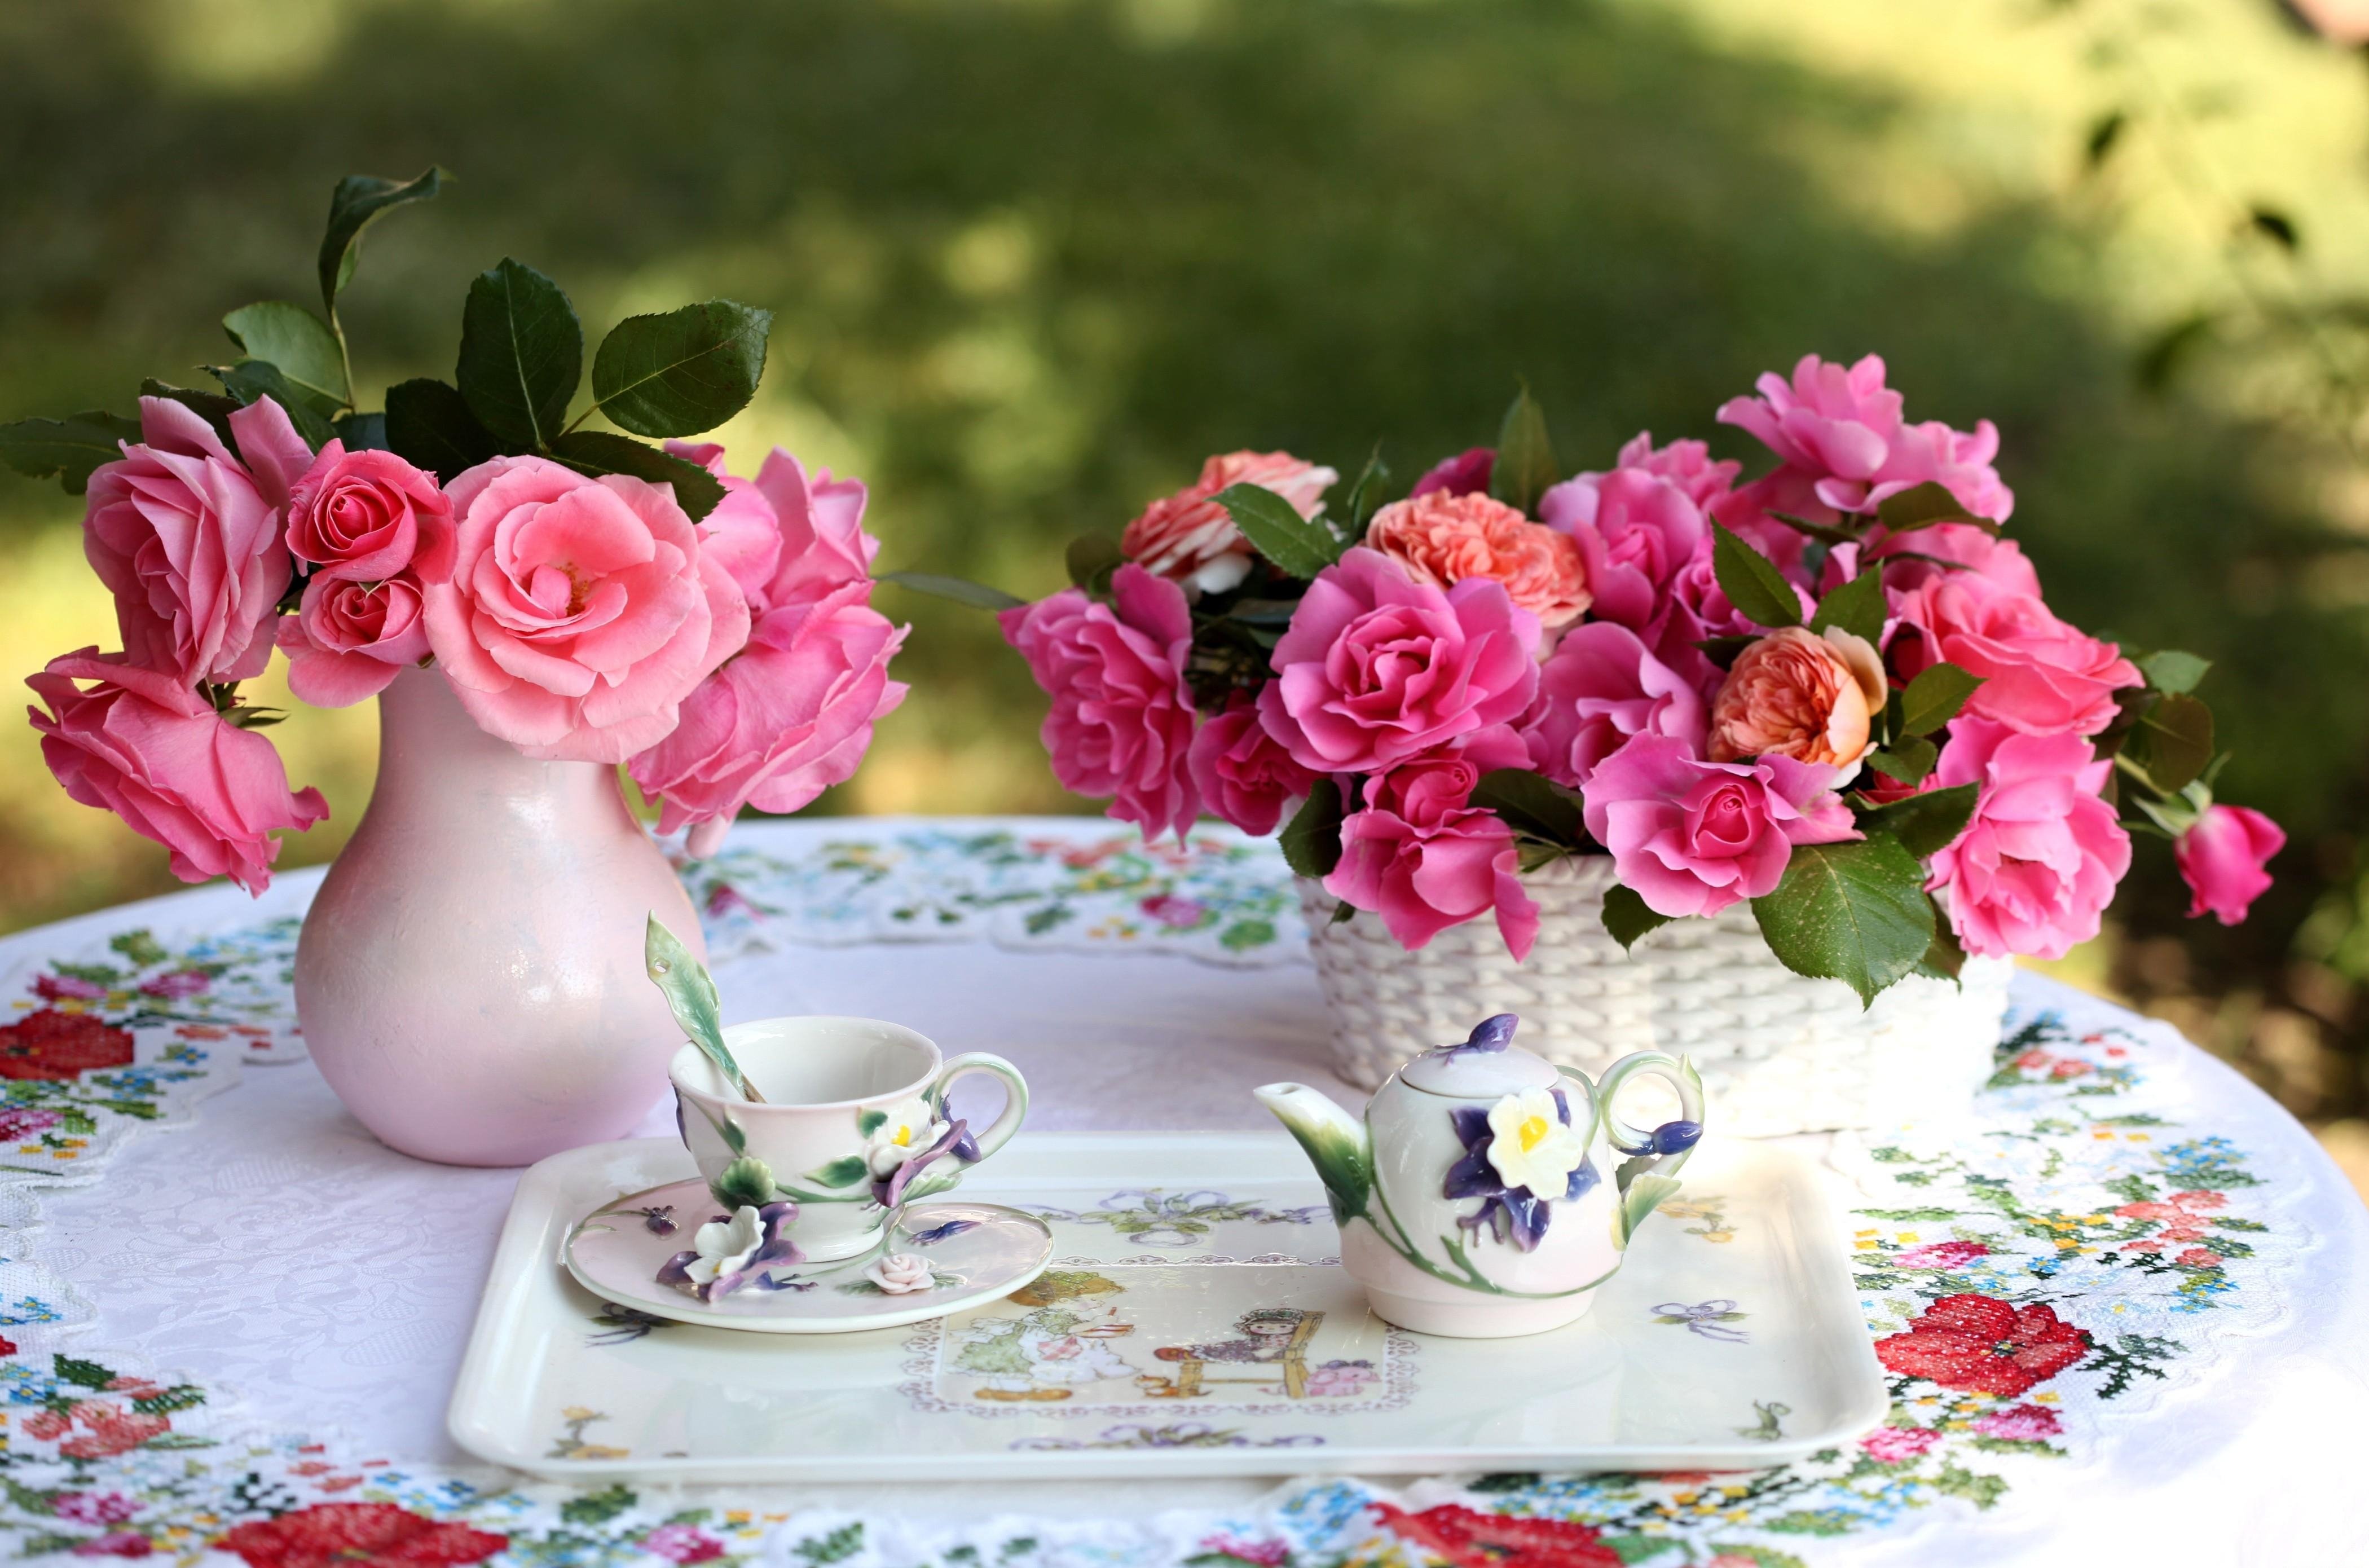 roses, Flowers, Bouquets, Vase, Basket, Table, Service, Tablecloth, Tea, Party Wallpaper